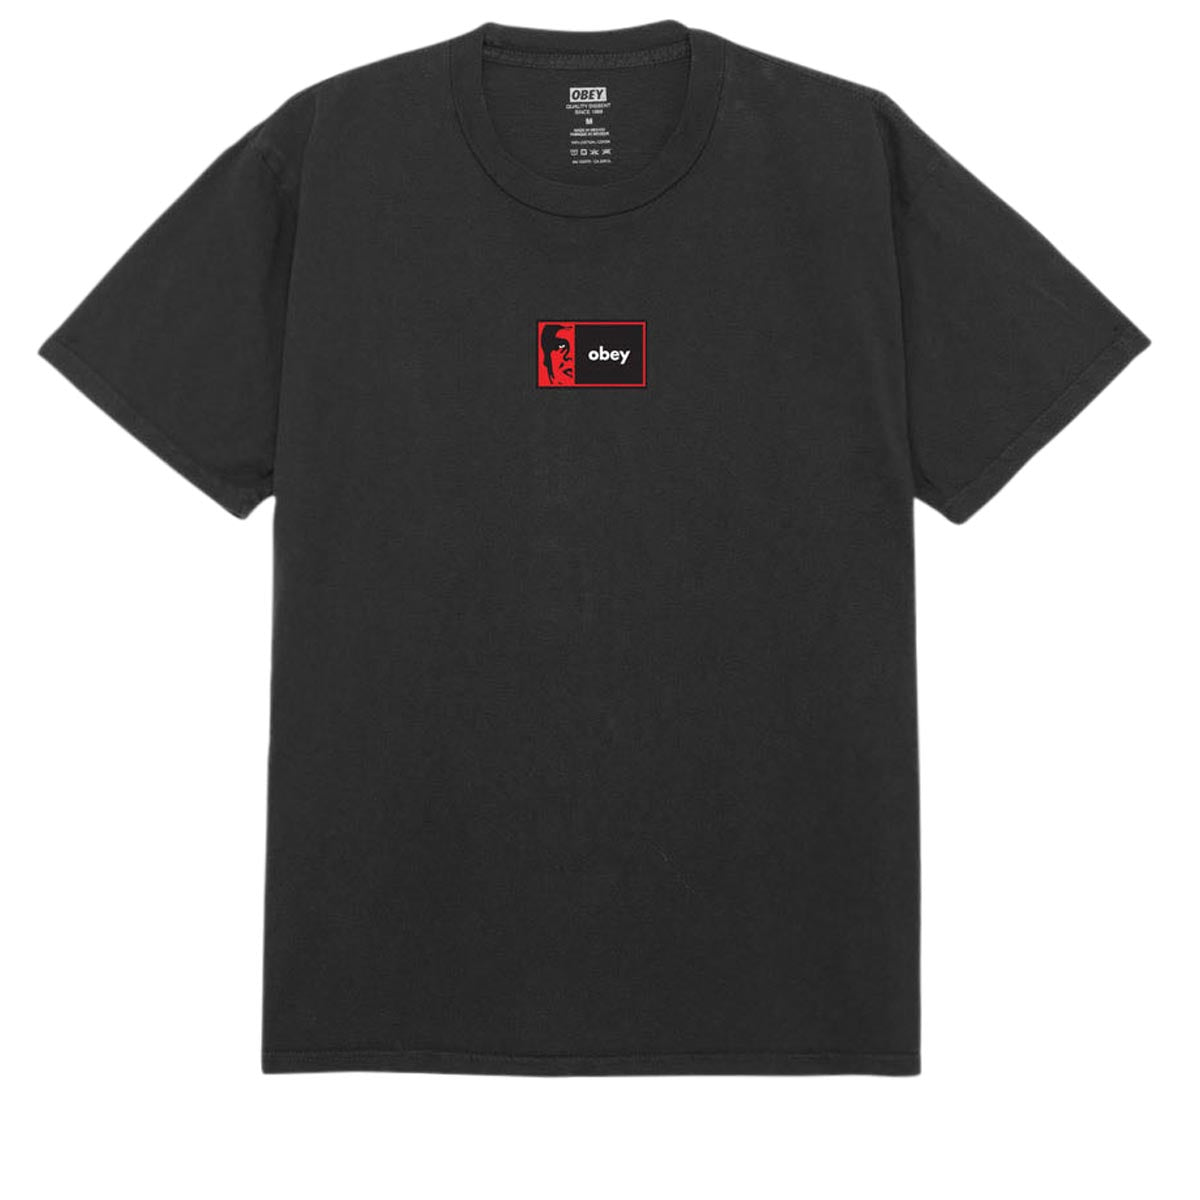 Obey Half Icon T-Shirt - Pigment Vintage Black image 1